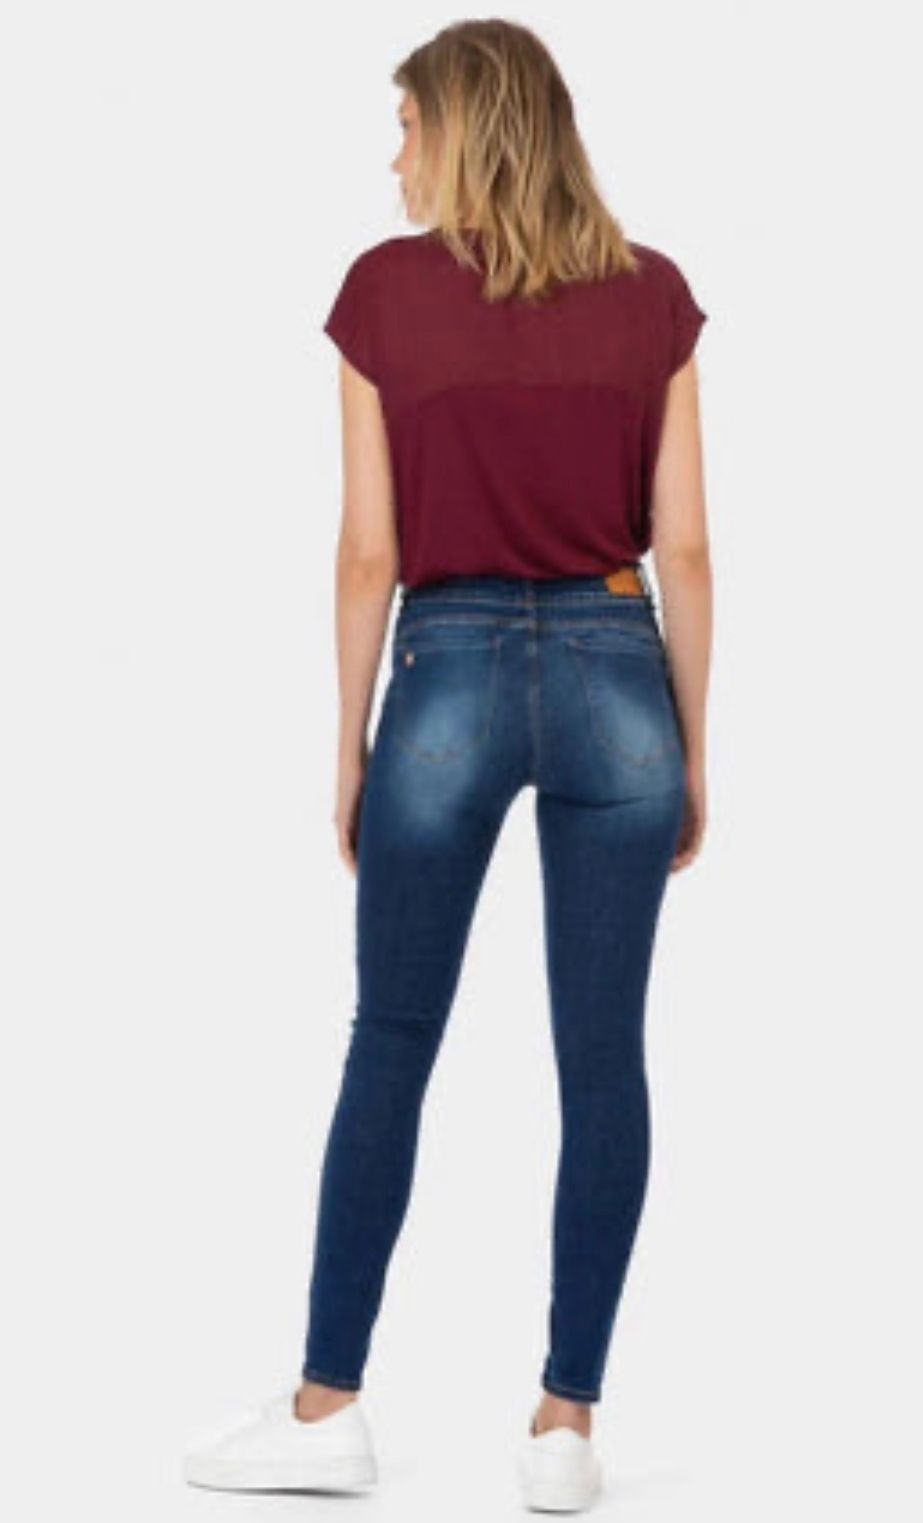 Tiffosi Jeans-One Size Double Comfort _4 Skinny-Dark Denim